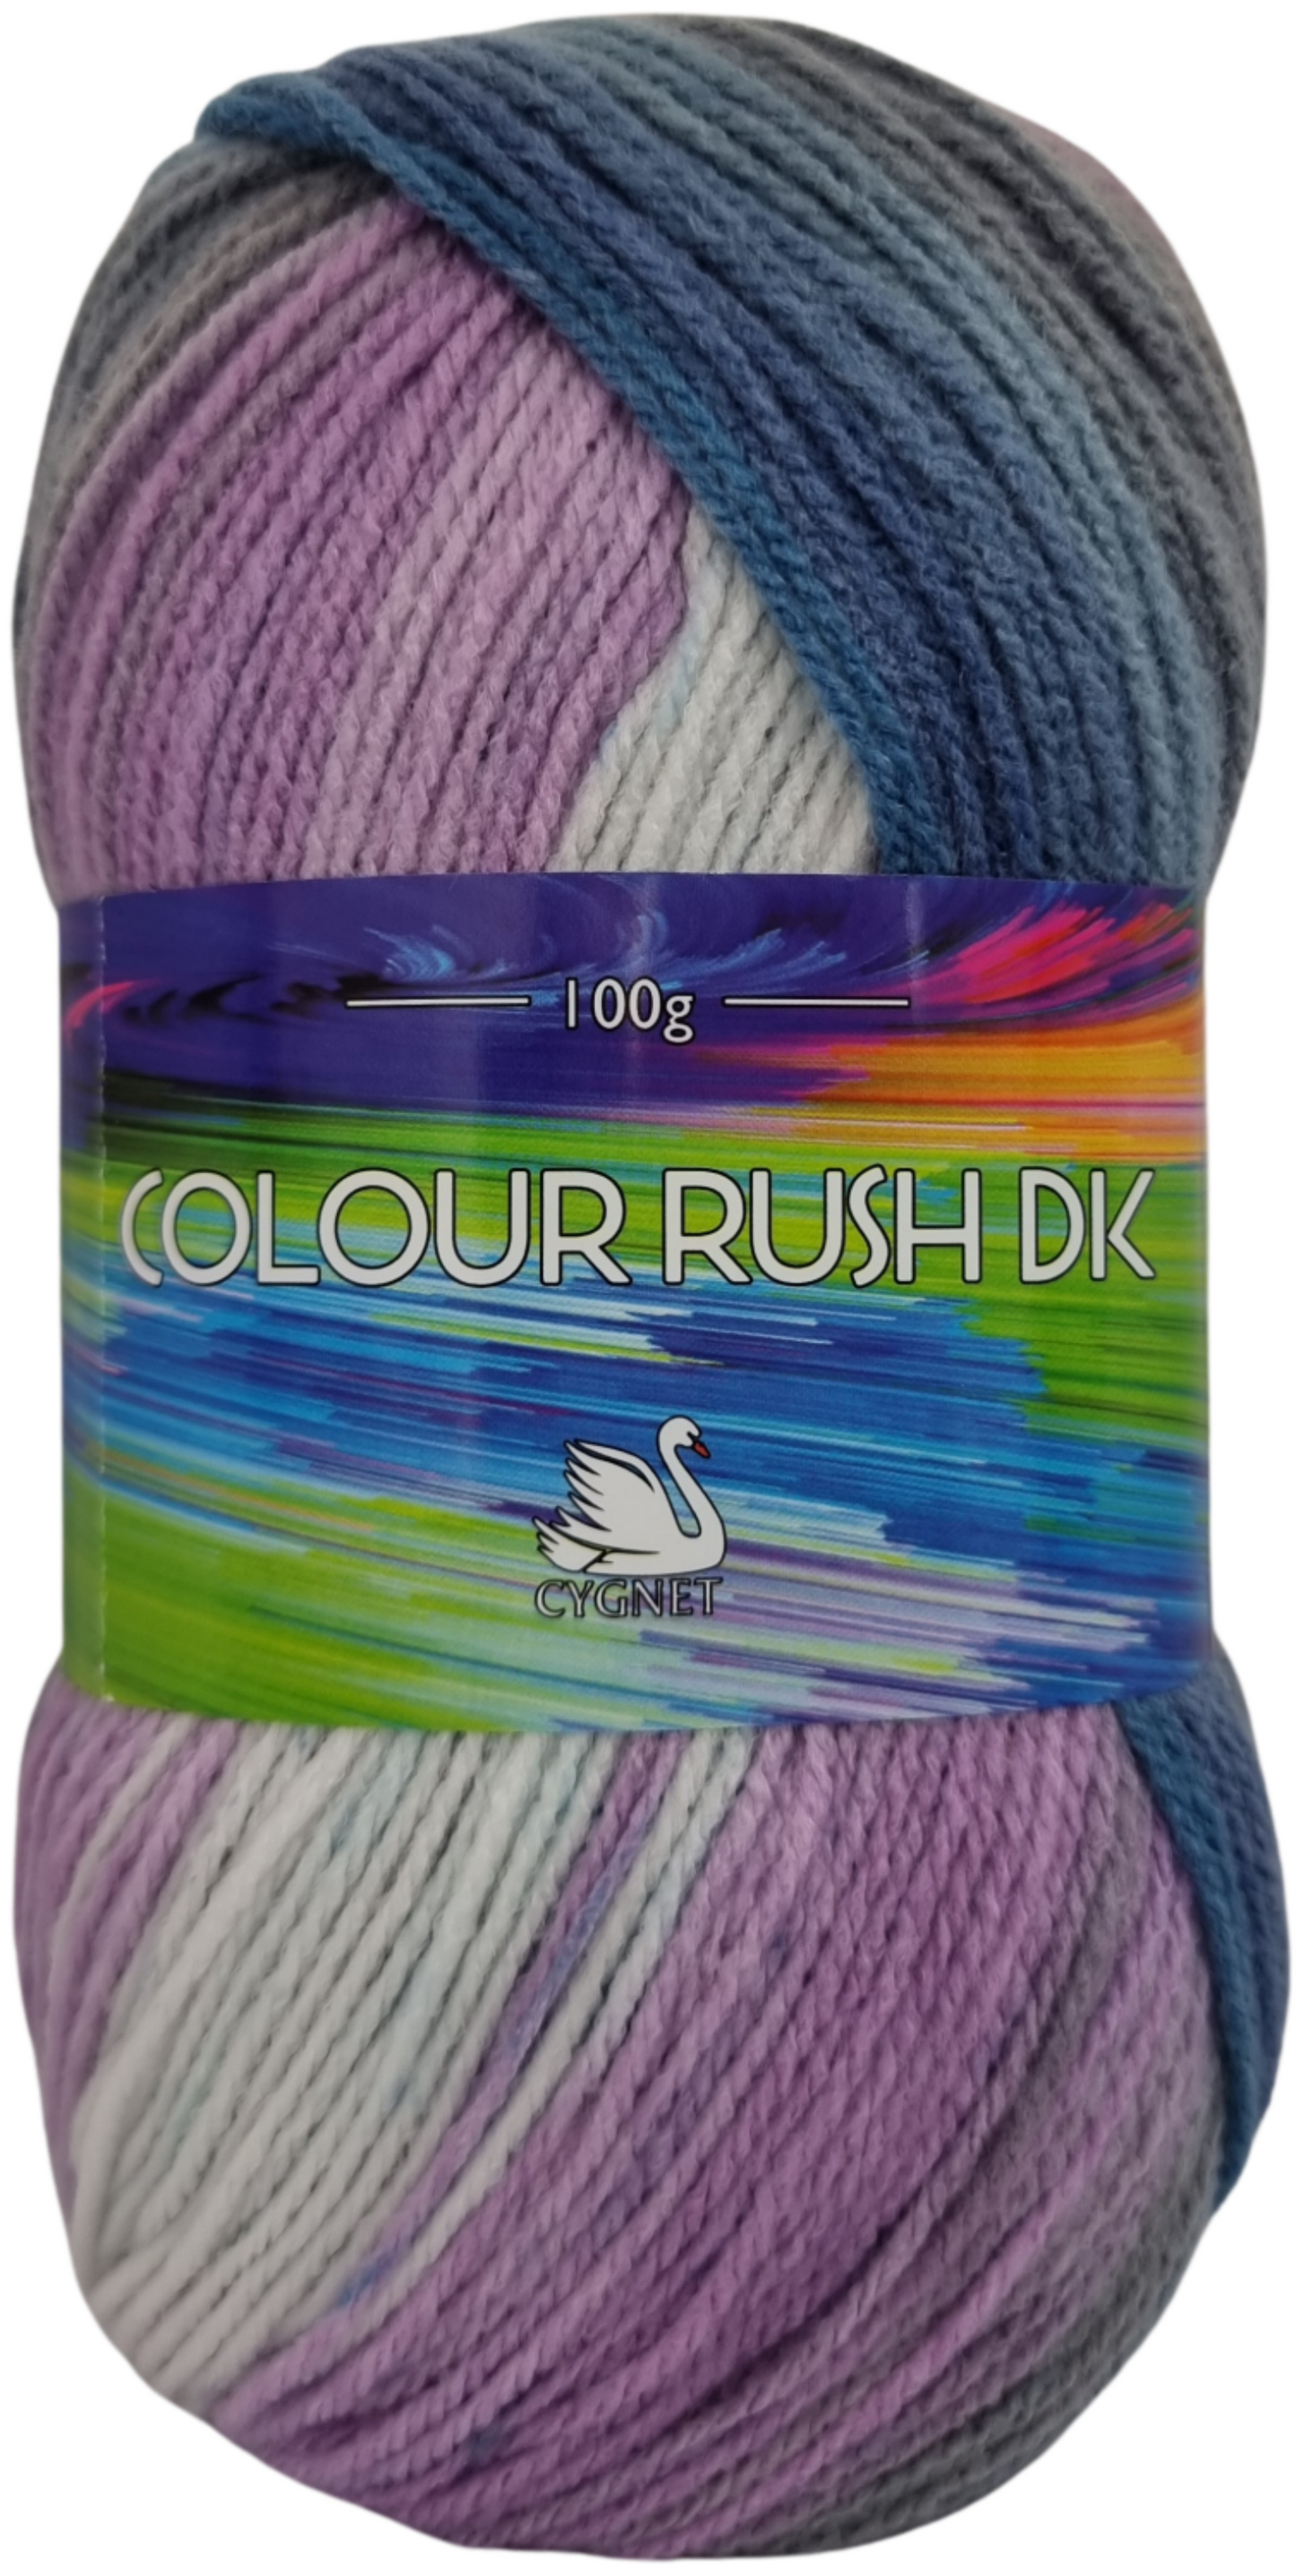 Violet Ice - Colour Rush DK - Cygnet Yarn